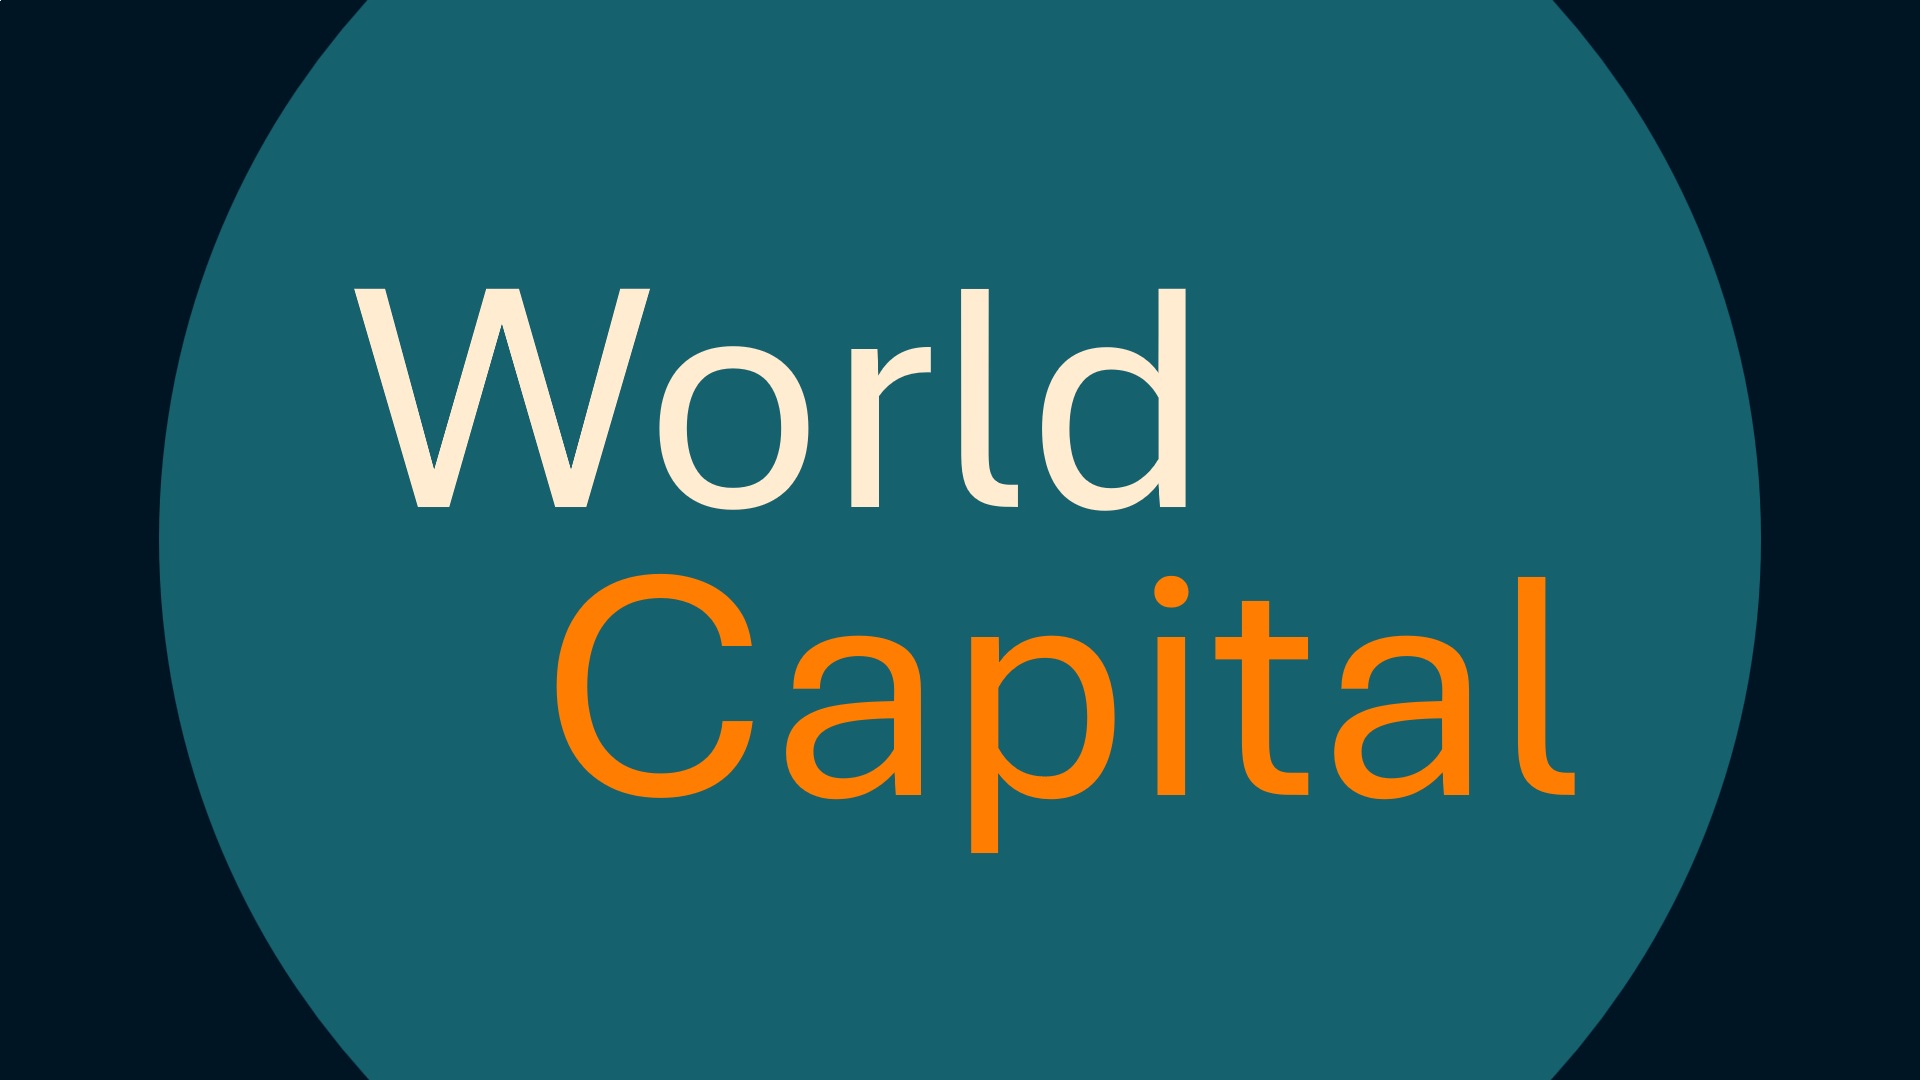 World Capital